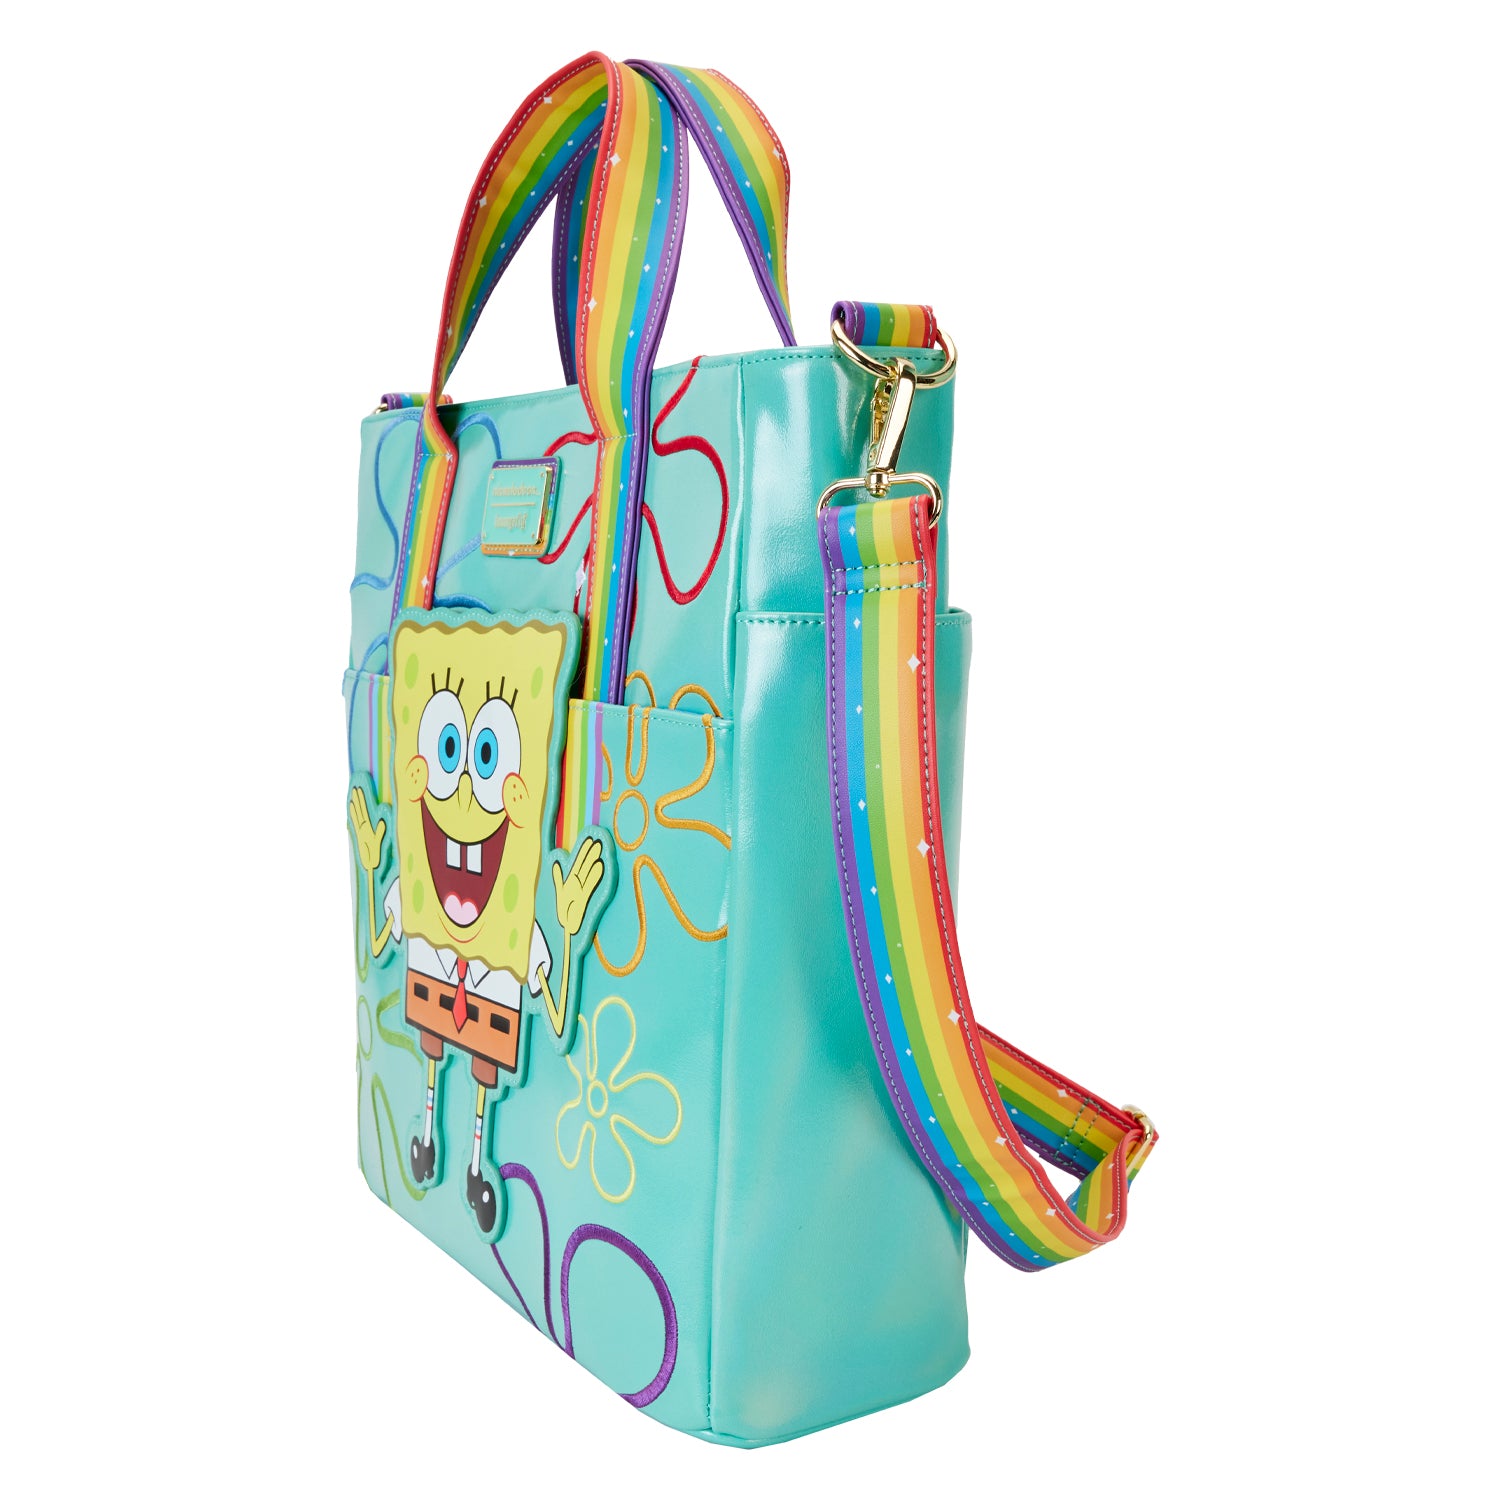 Loungefly Nickelodeon Spongebob 25th Anniversary Imagination Convertible Tote Bag